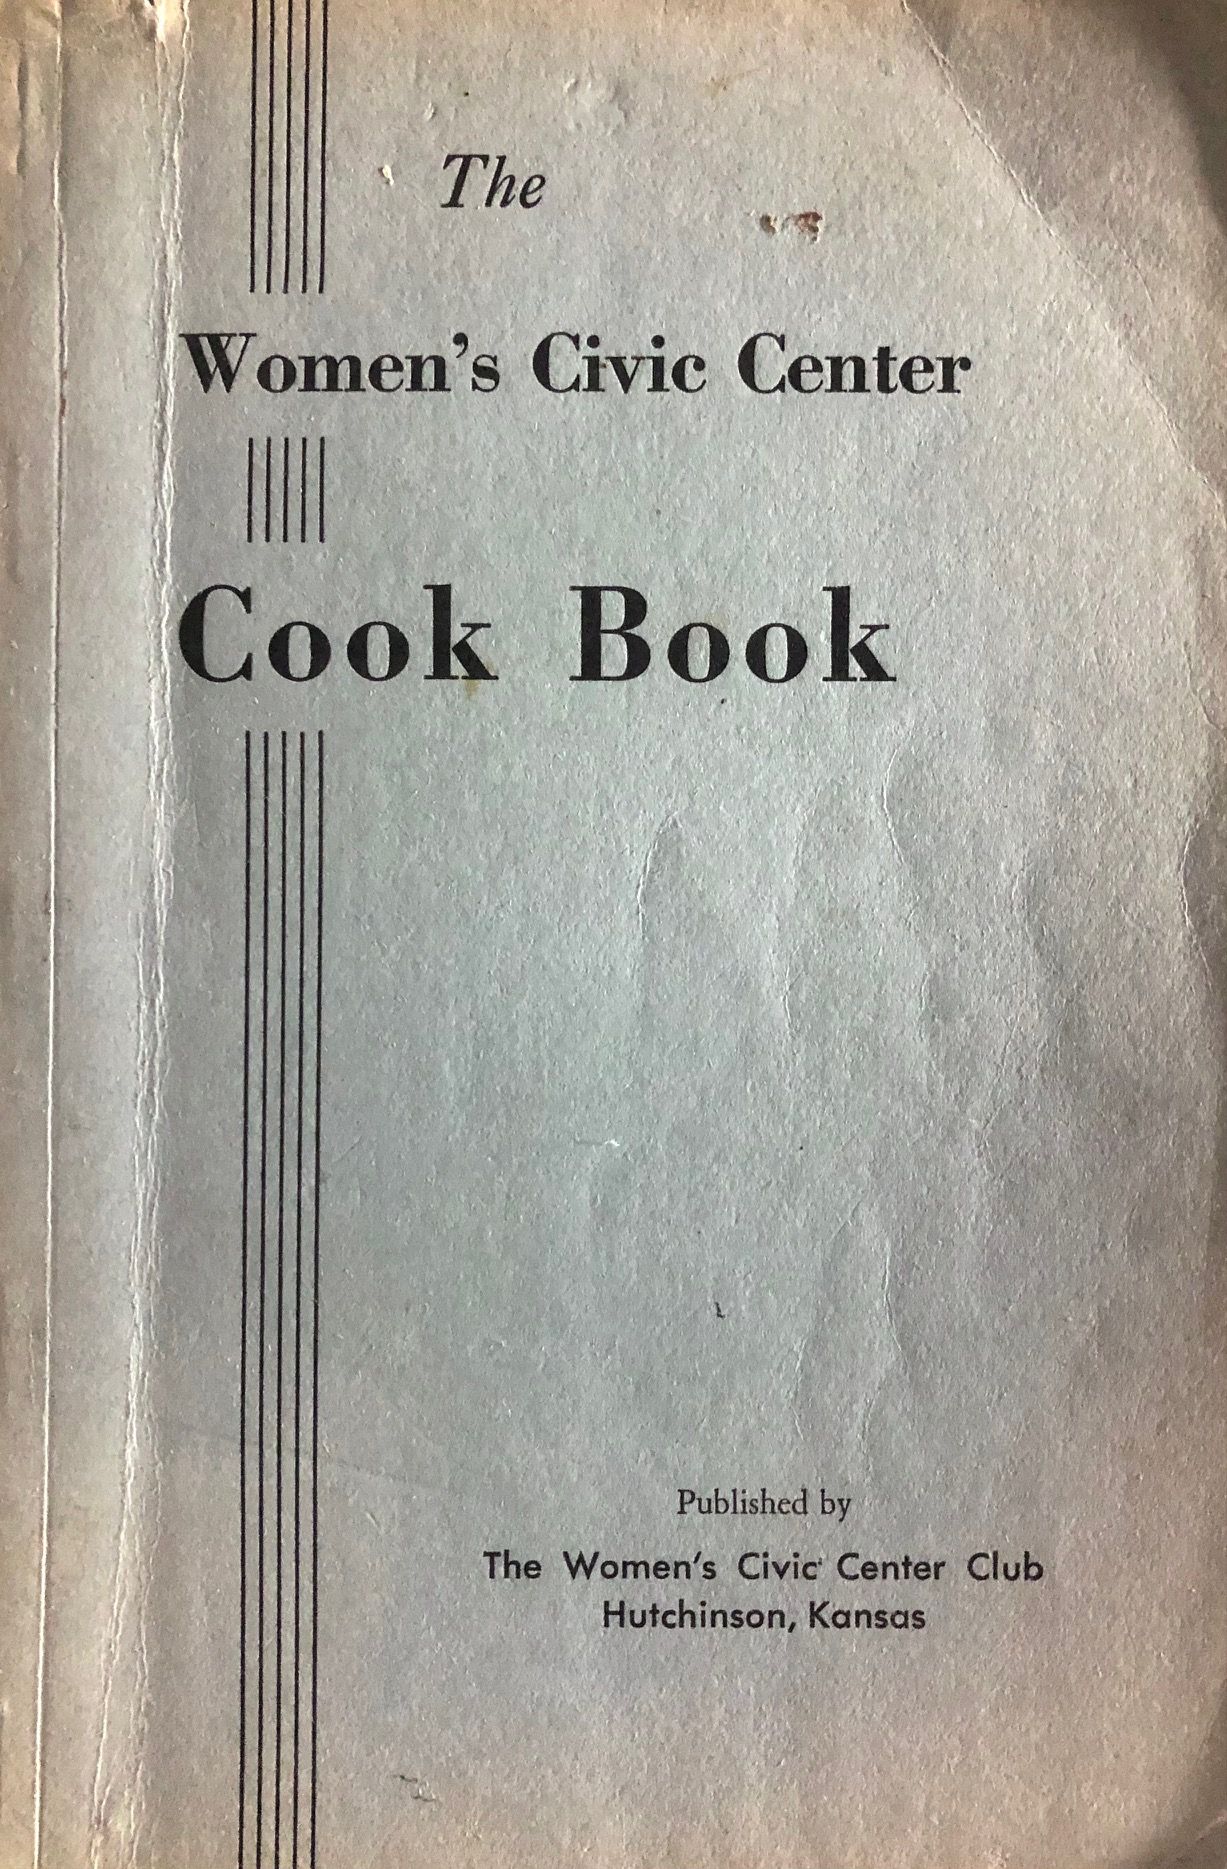 (Kansas) The Women’s Civic Center Cook Book.